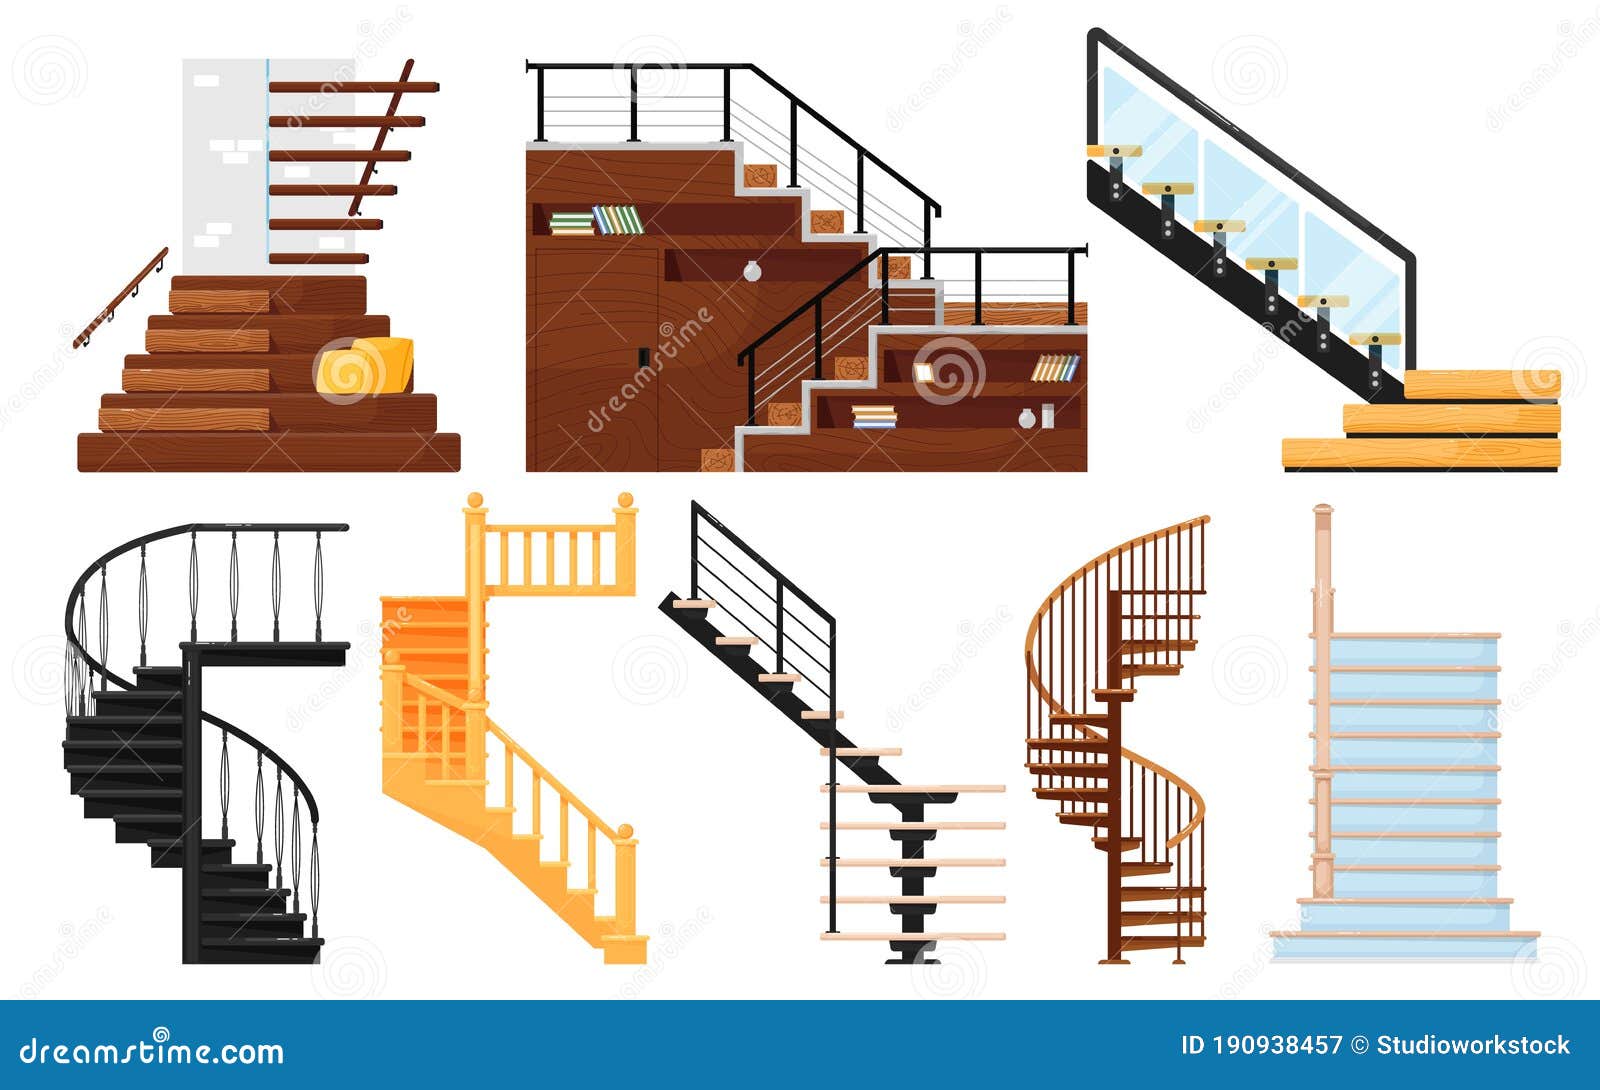 interior wooden stairs, store escalator